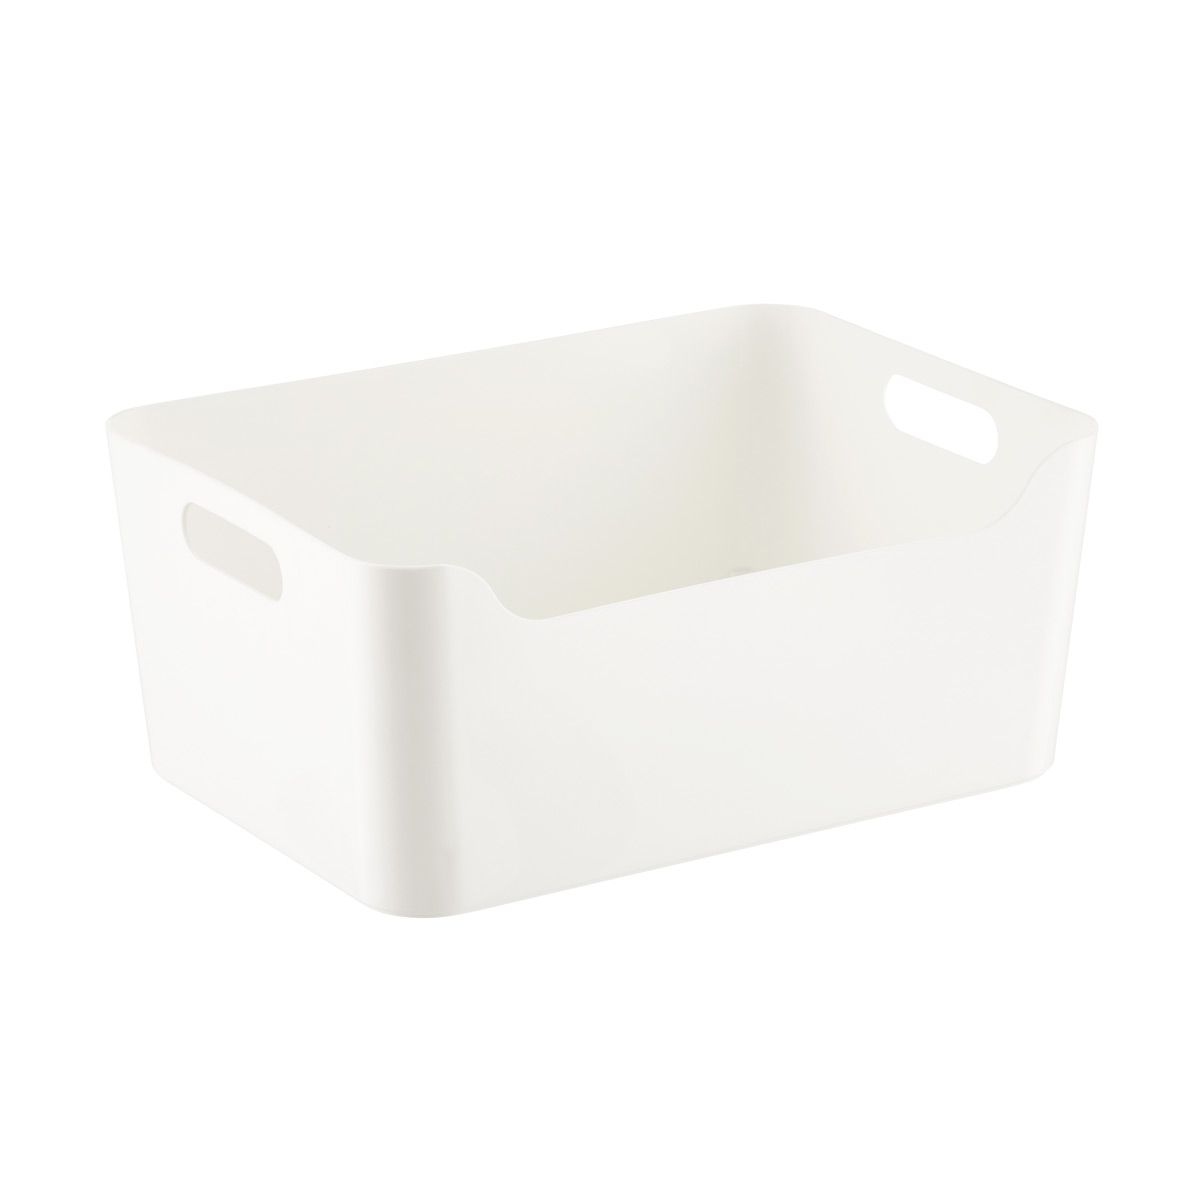 Medium Plastic Storage Bin w/ Handles WhiteSKU:100712954.993 Reviews | The Container Store